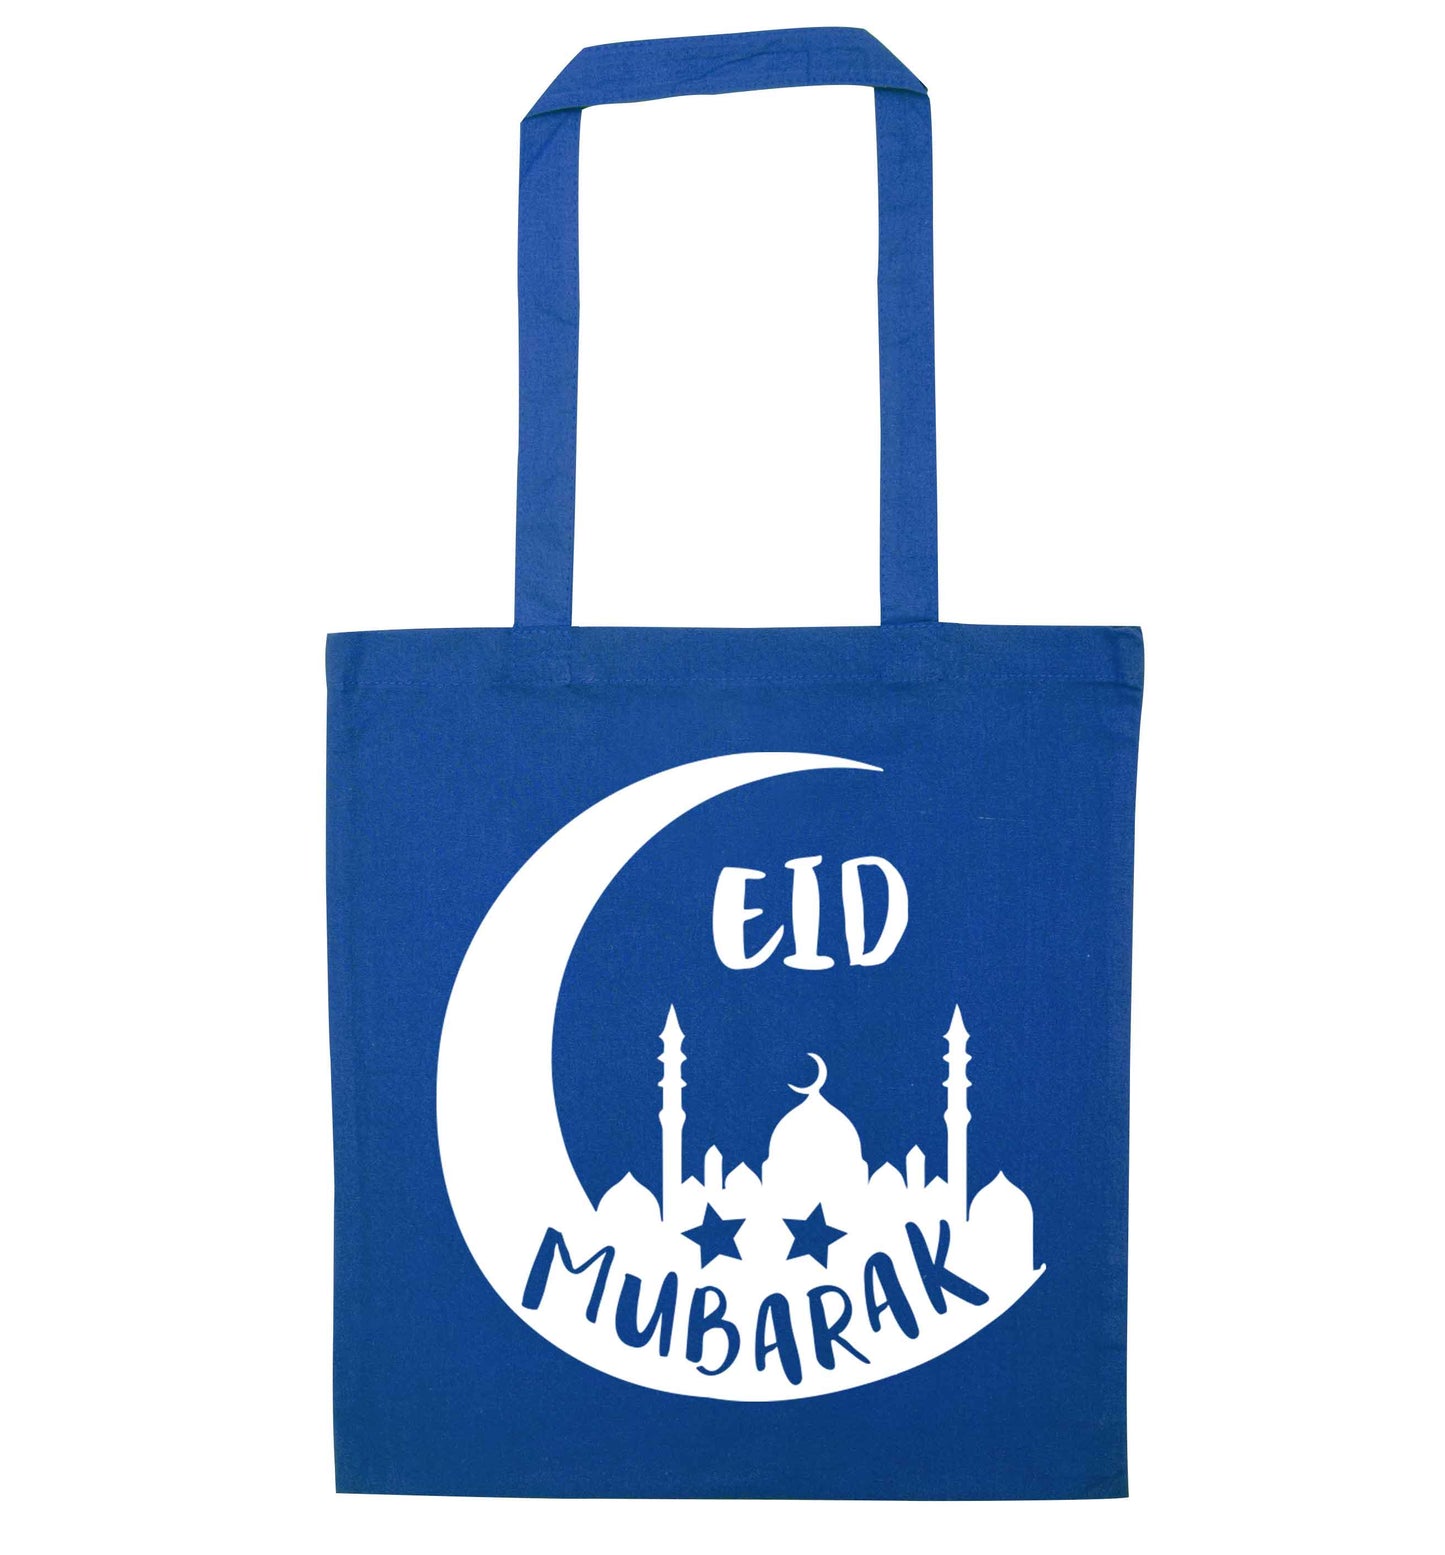 Eid mubarak blue tote bag